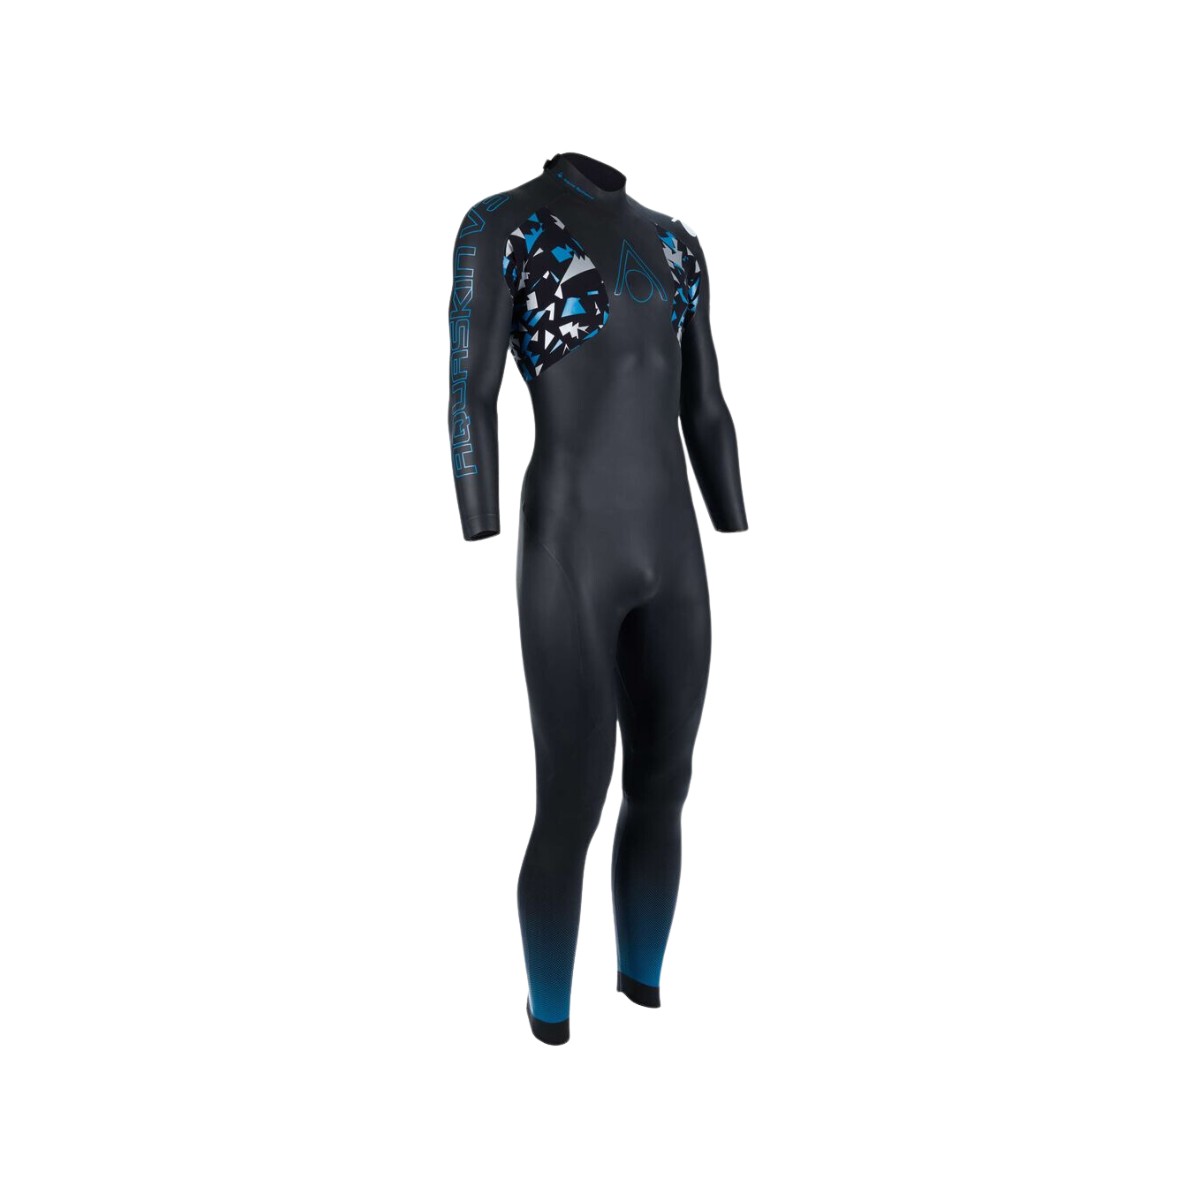 Roupa de mergulho Aquasphere Aquaskin Full Suit V3 Preto Turquesa, Tamanho XL